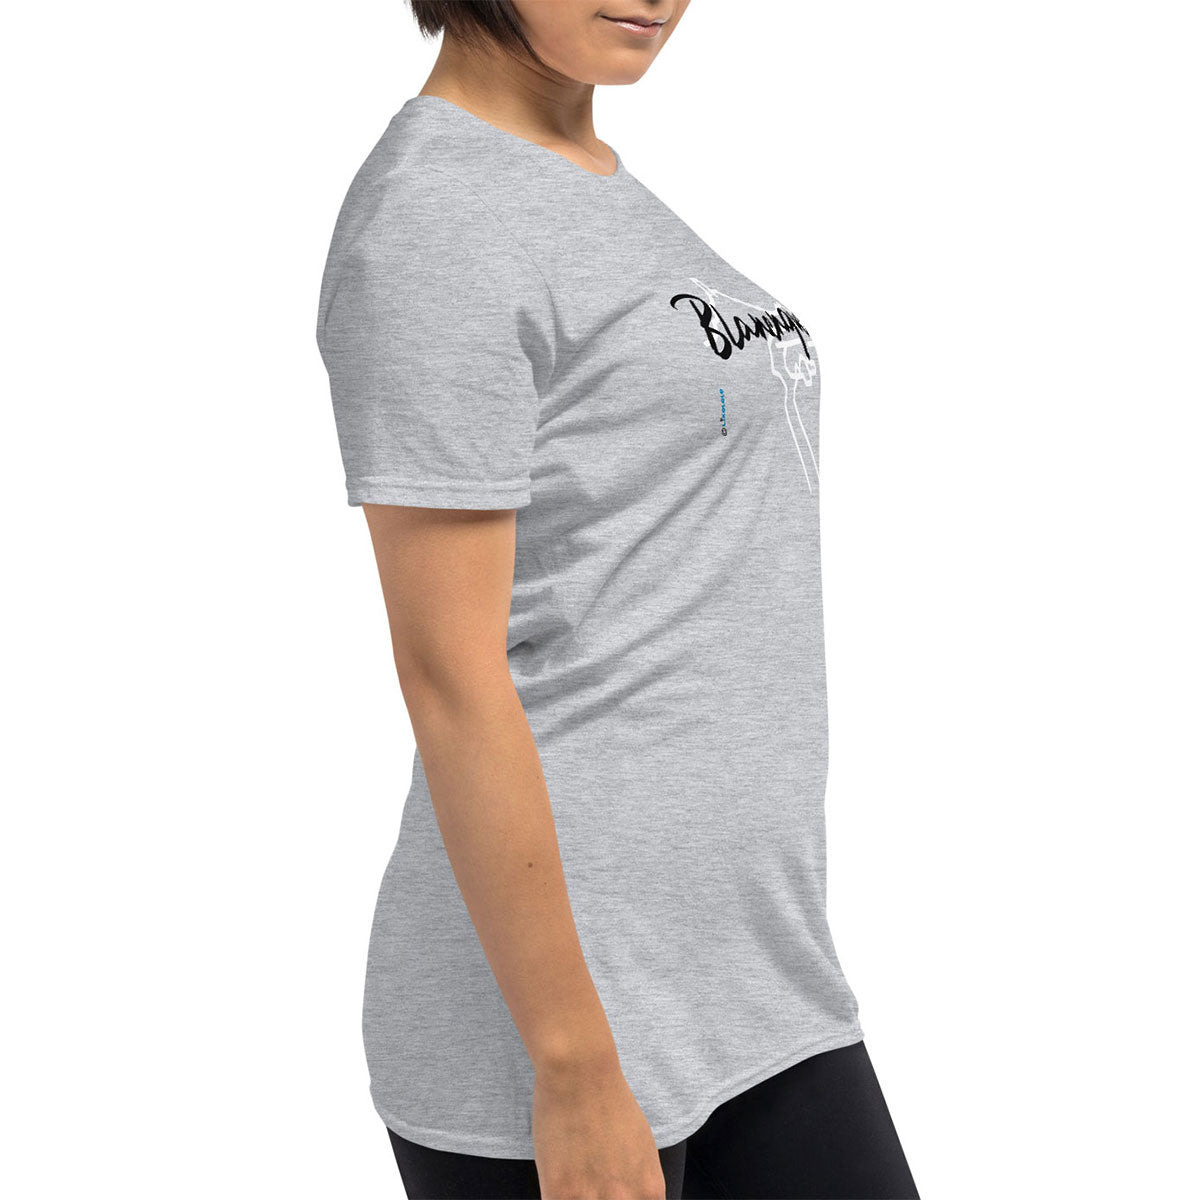 BLANENQUES · Camiseta m/corta·Mujer/Unisex · Basic·Gris1 jaspeado-101b